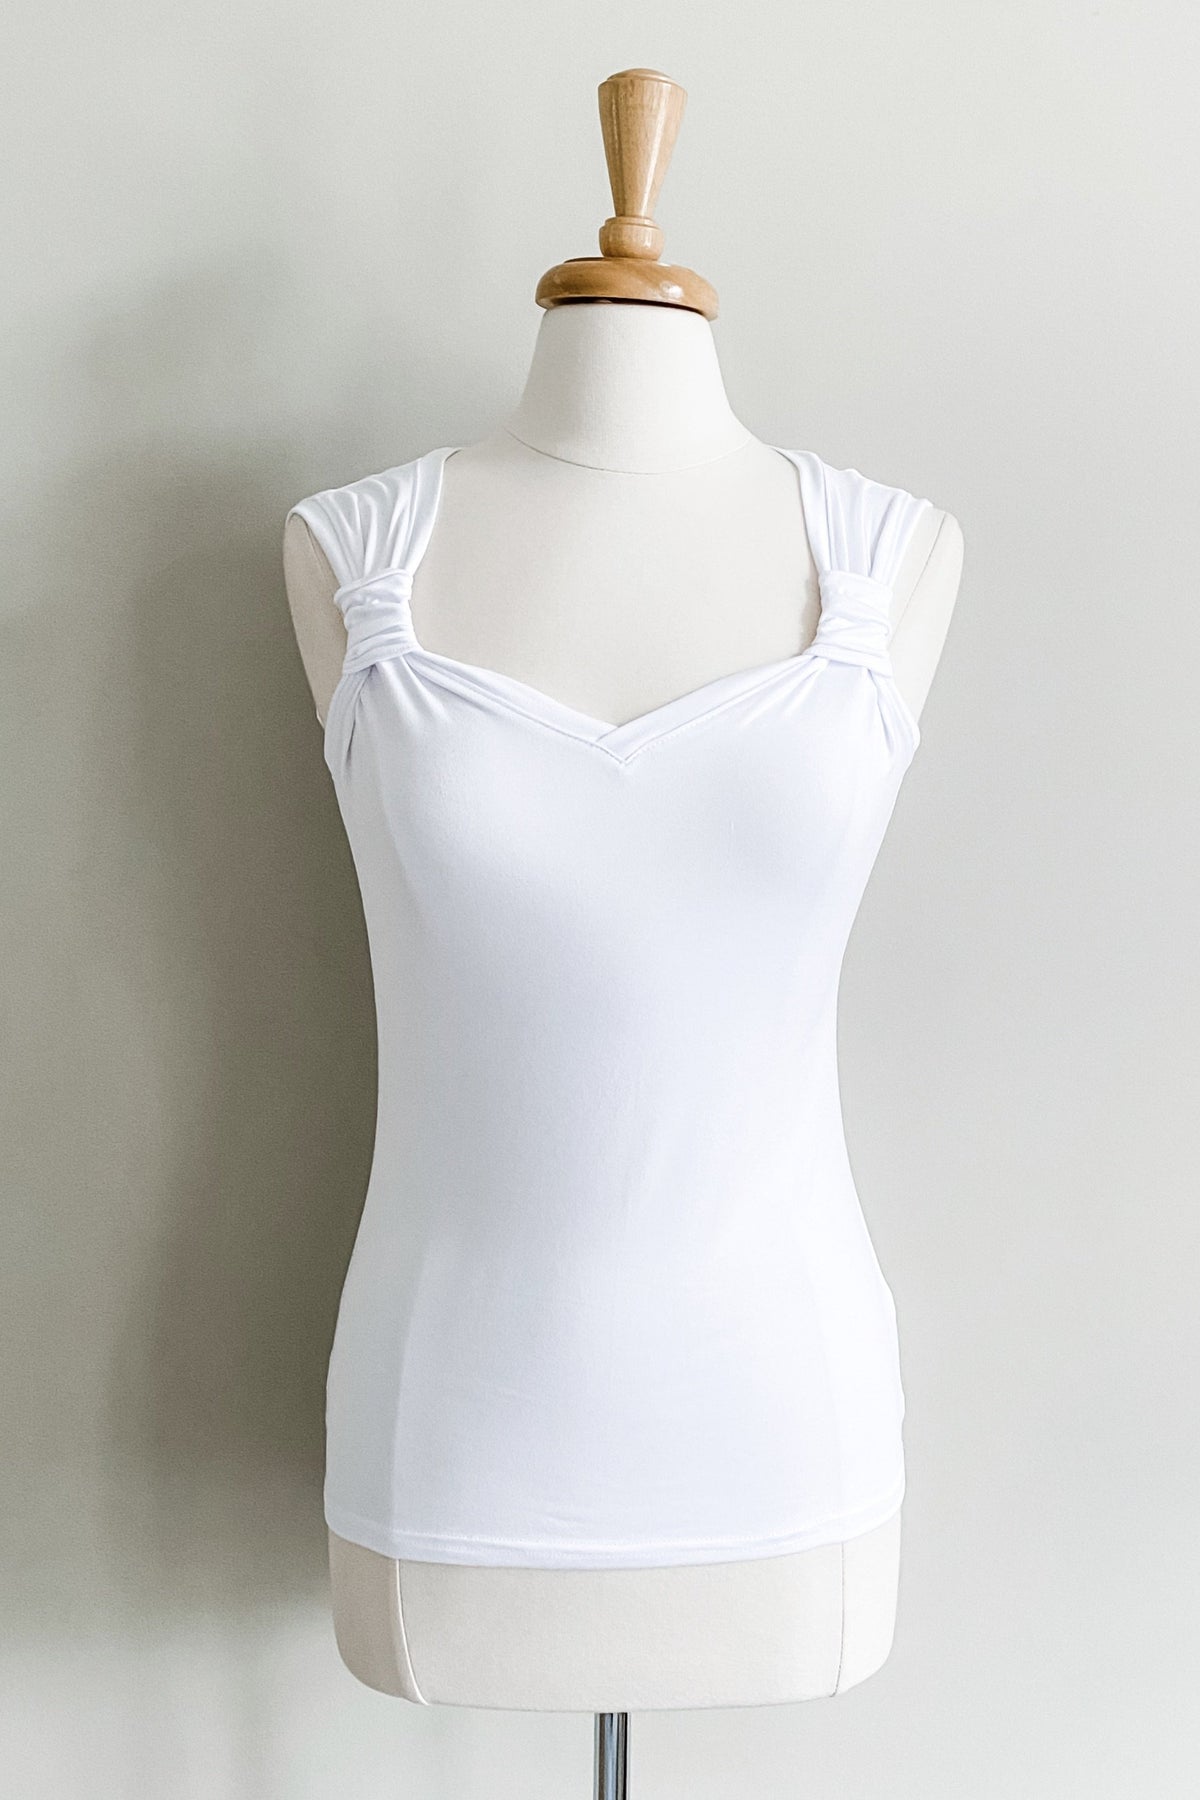 Convertible Cami Top in White colour